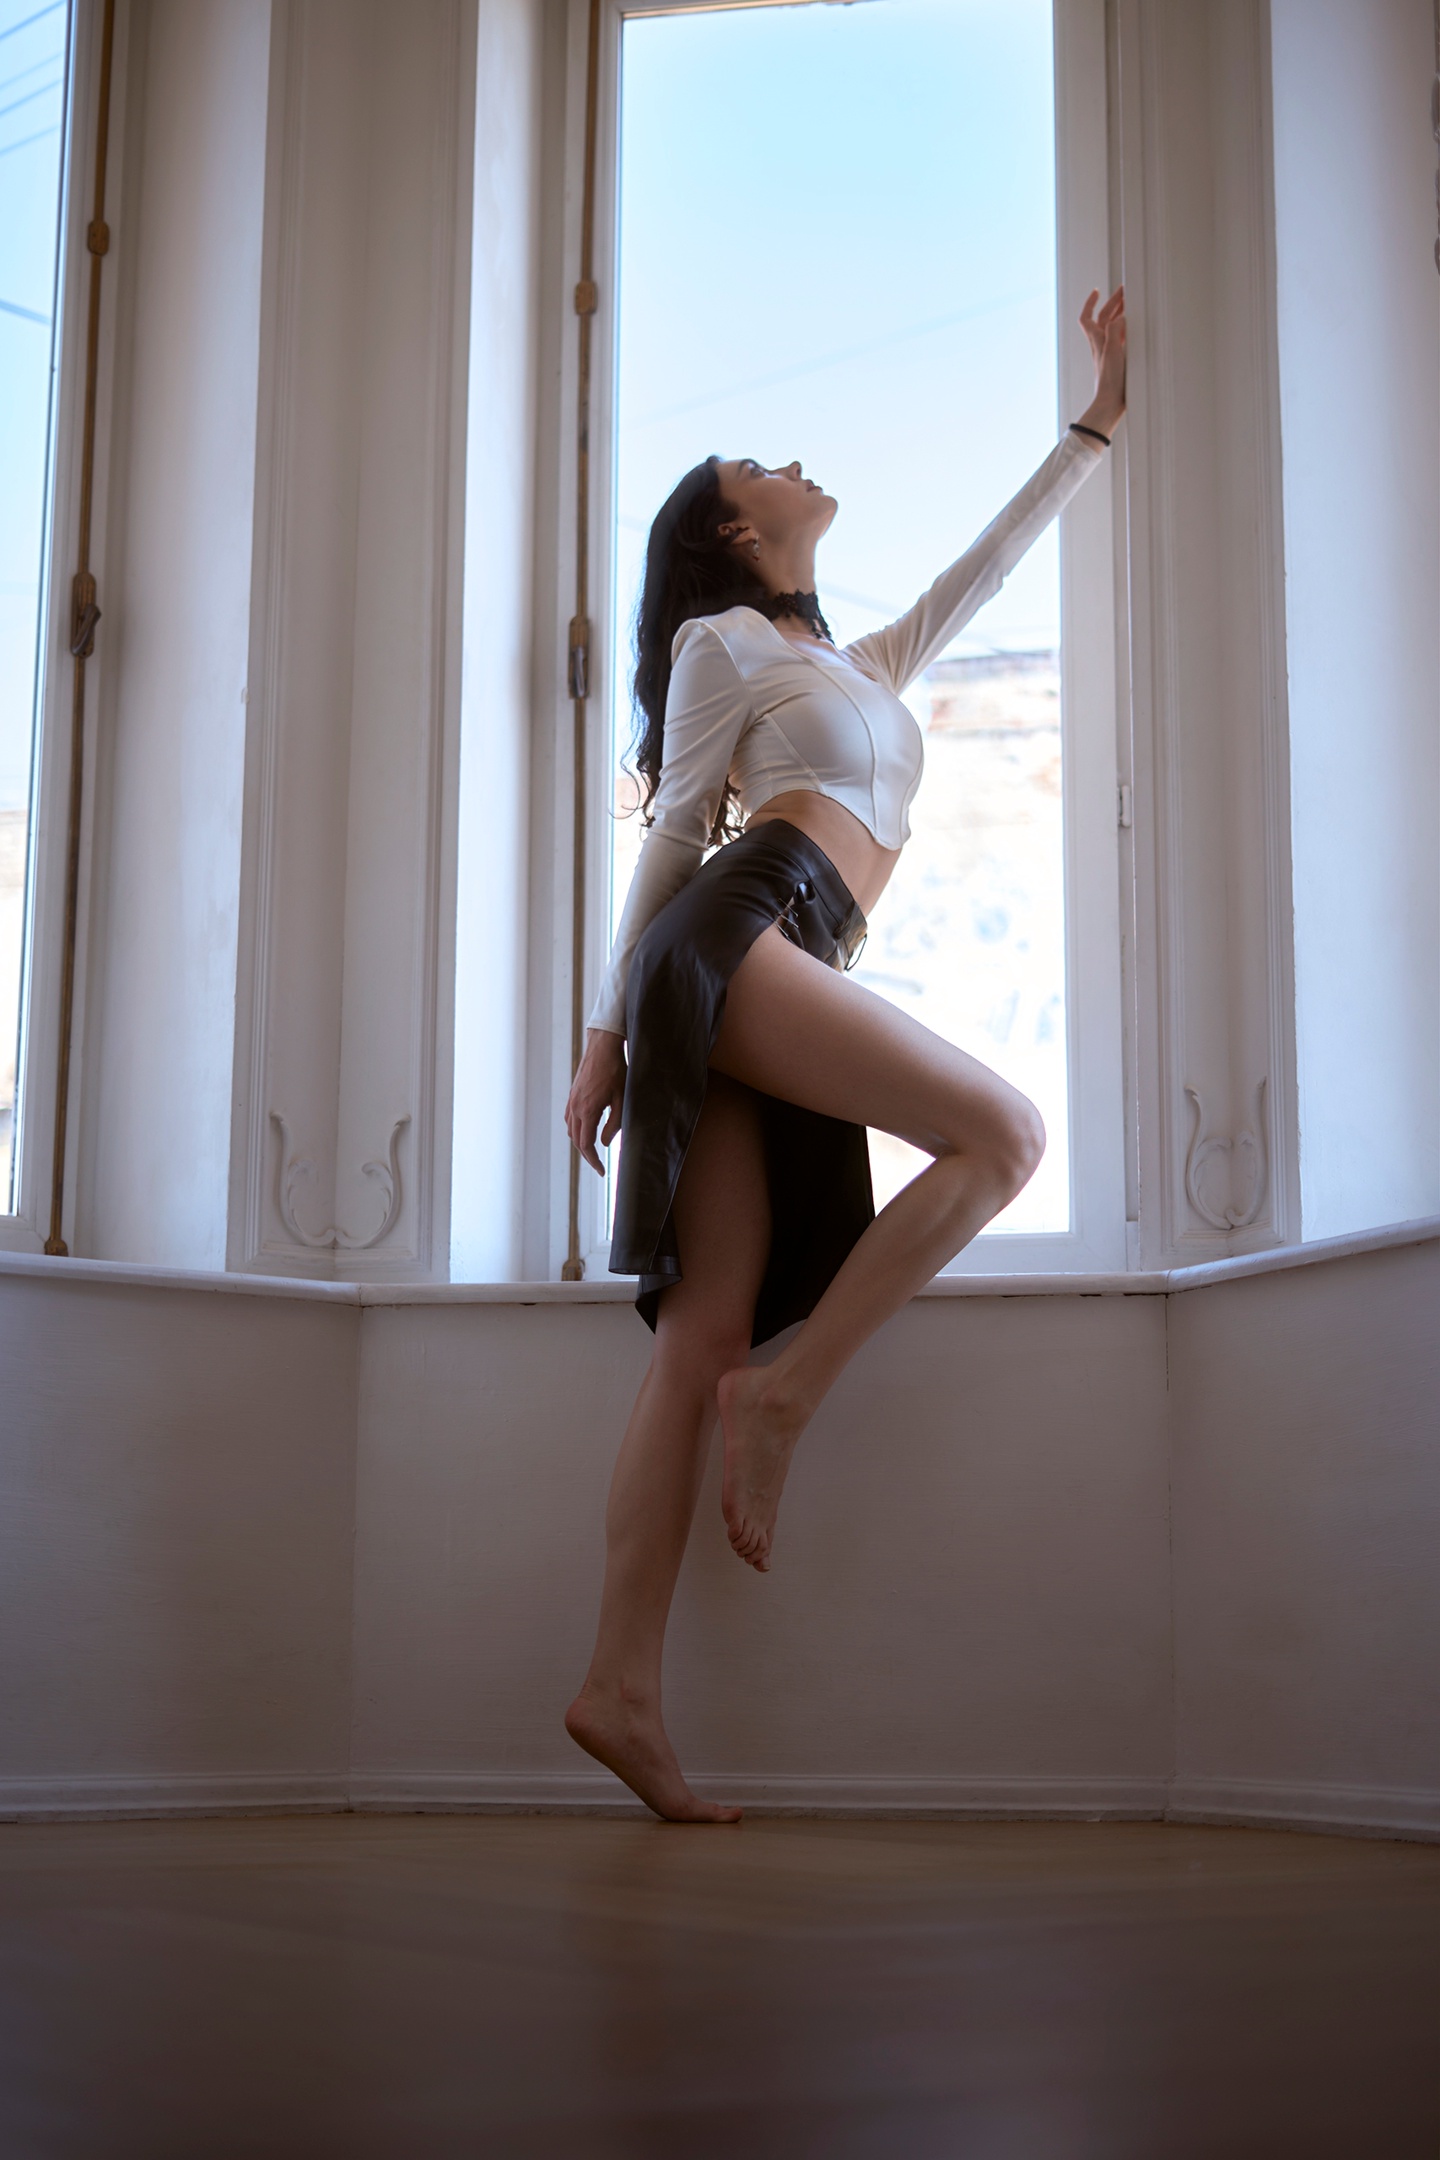 Maxim Savin Women Brunette White Clothing Legs Barefoot Skirt Window Model Tiptoe Women Indoors 1440x2160